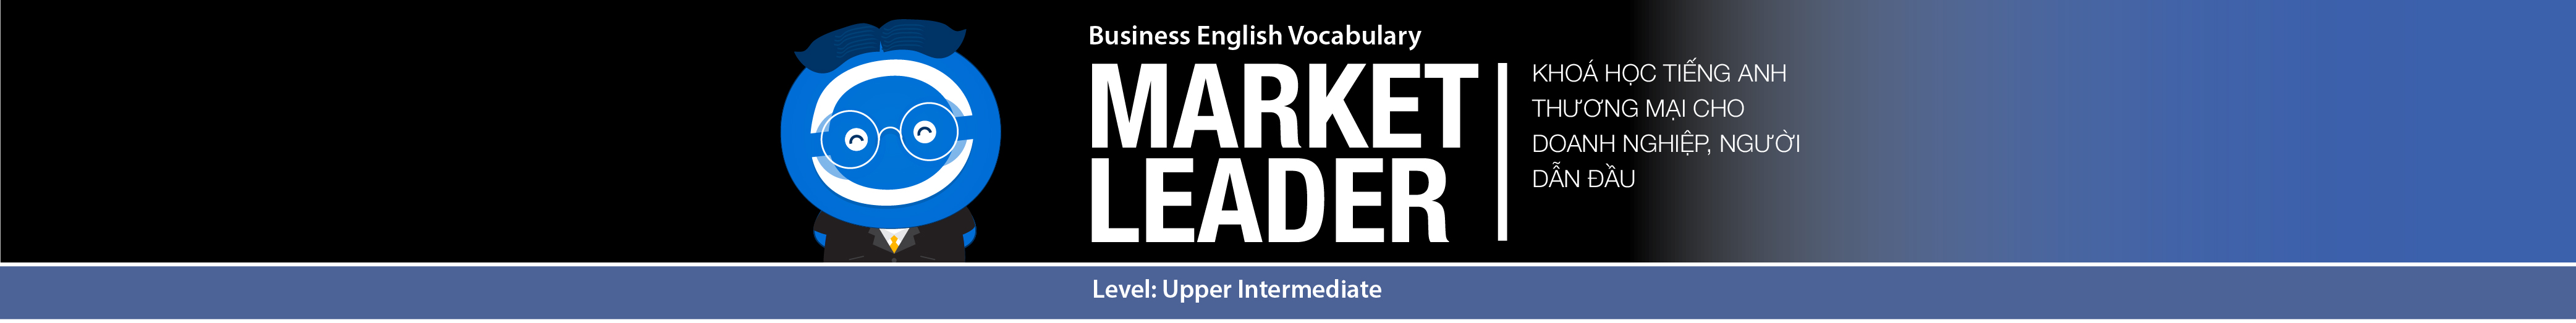 Market Leader (Upper Intermediate)